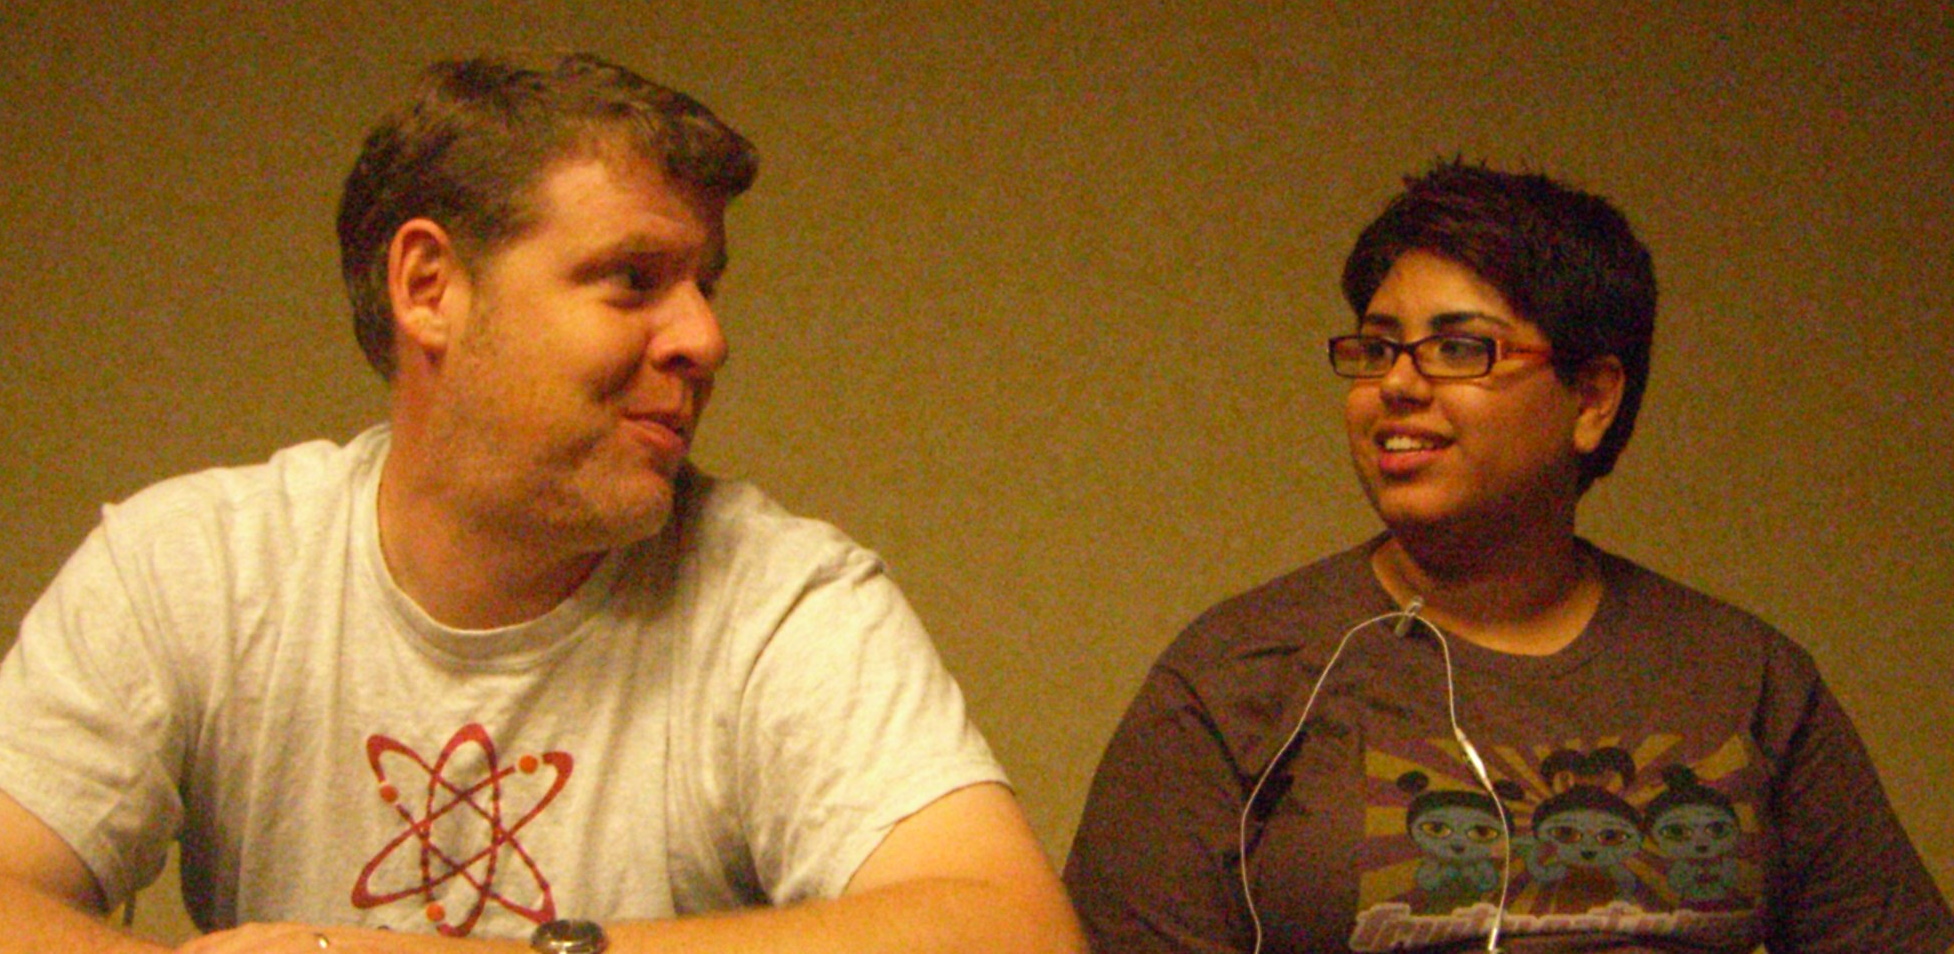 Finding Love in Fandom panel at ApolloCon 2007